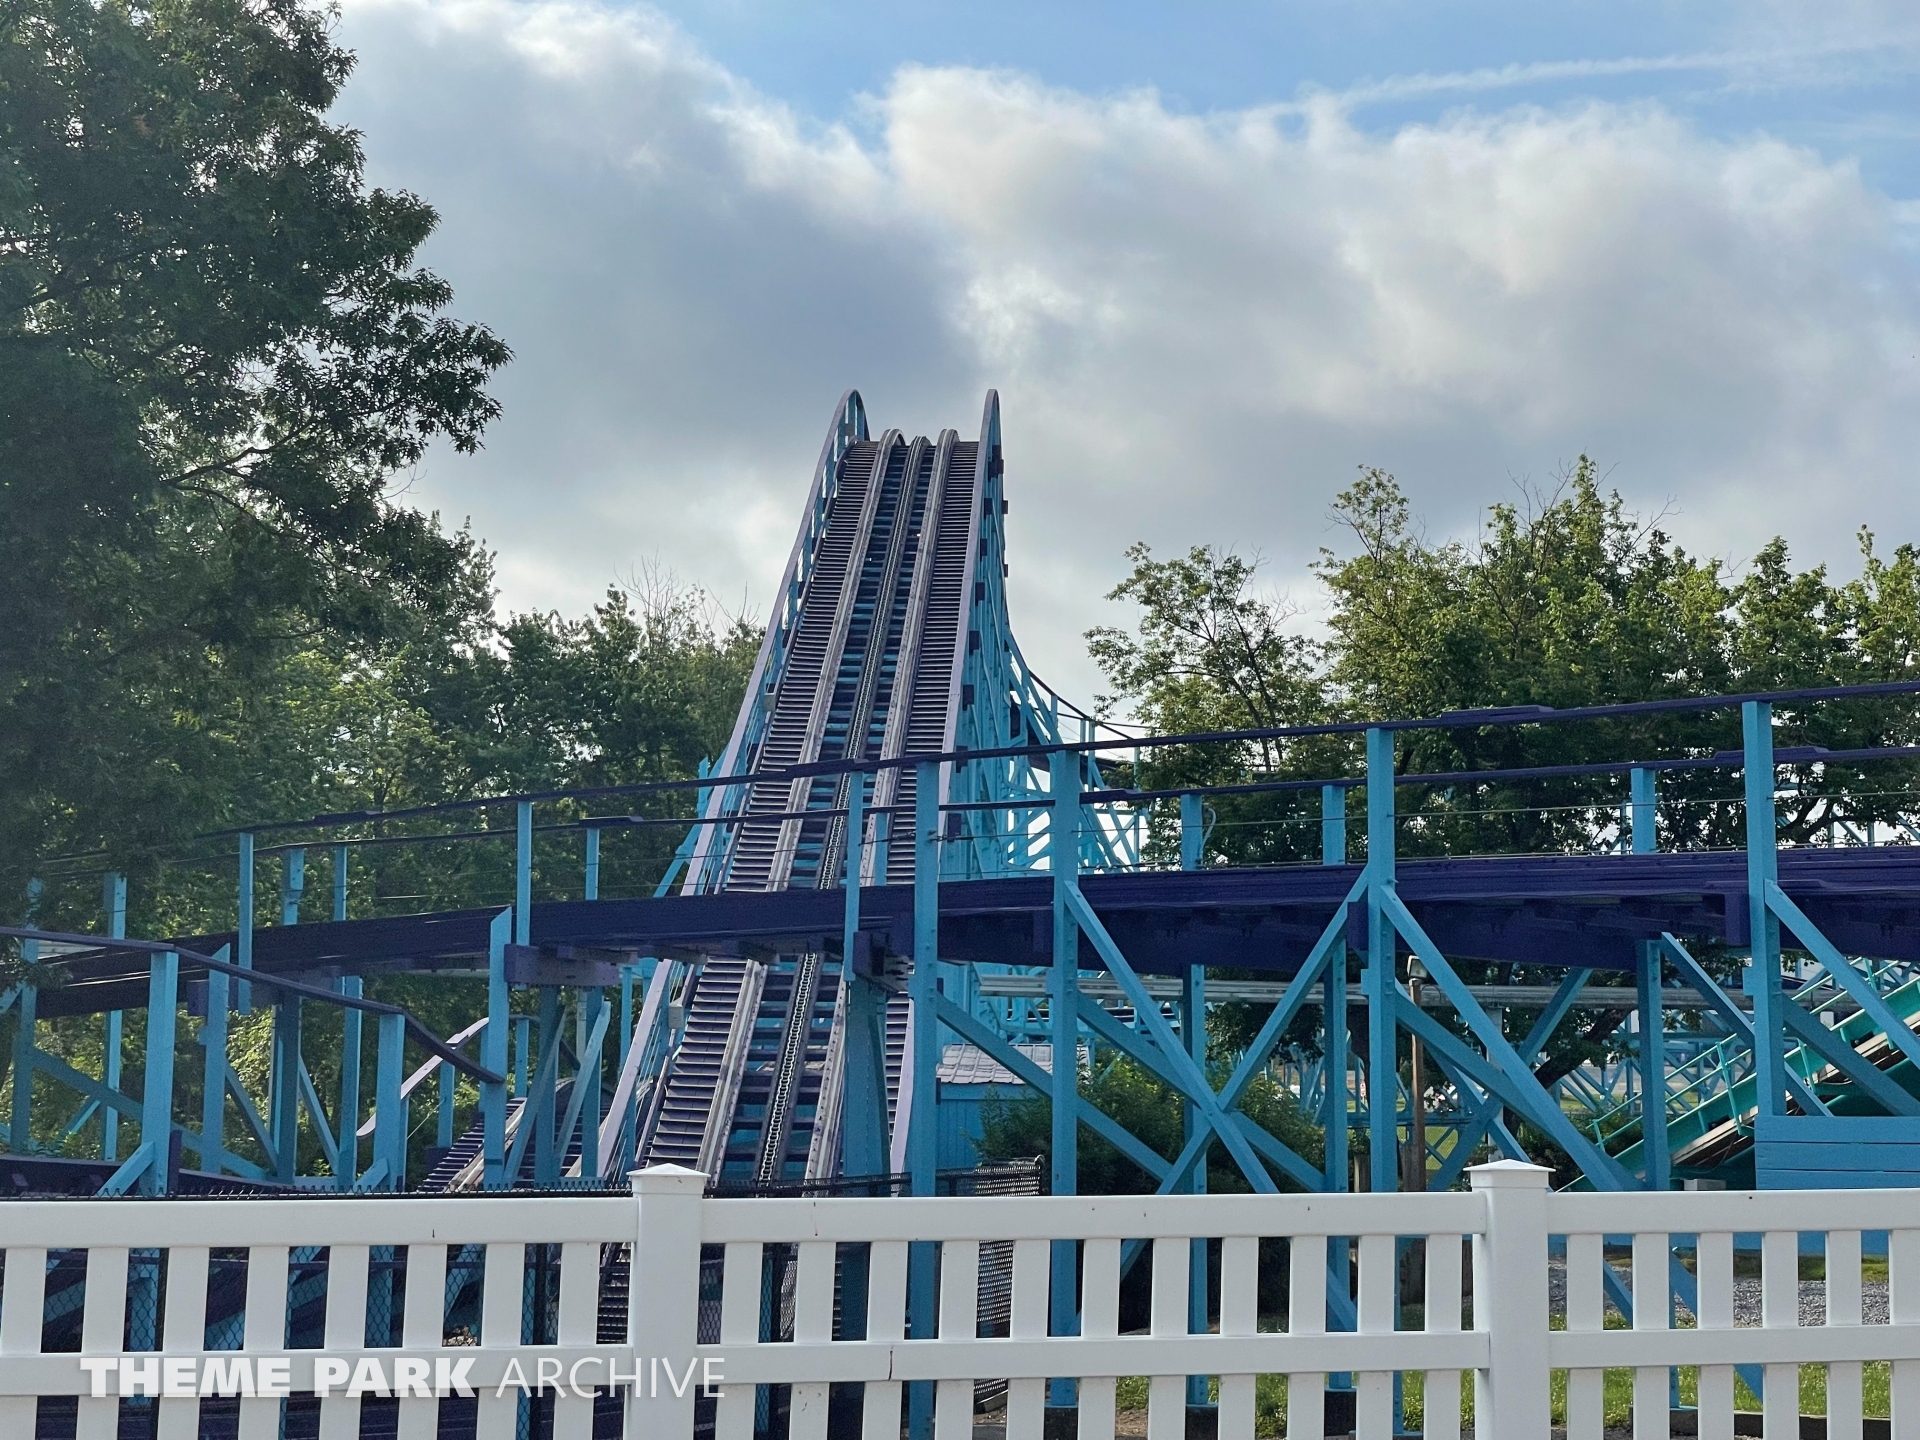 Kingdom Coaster at Dutch Wonderland